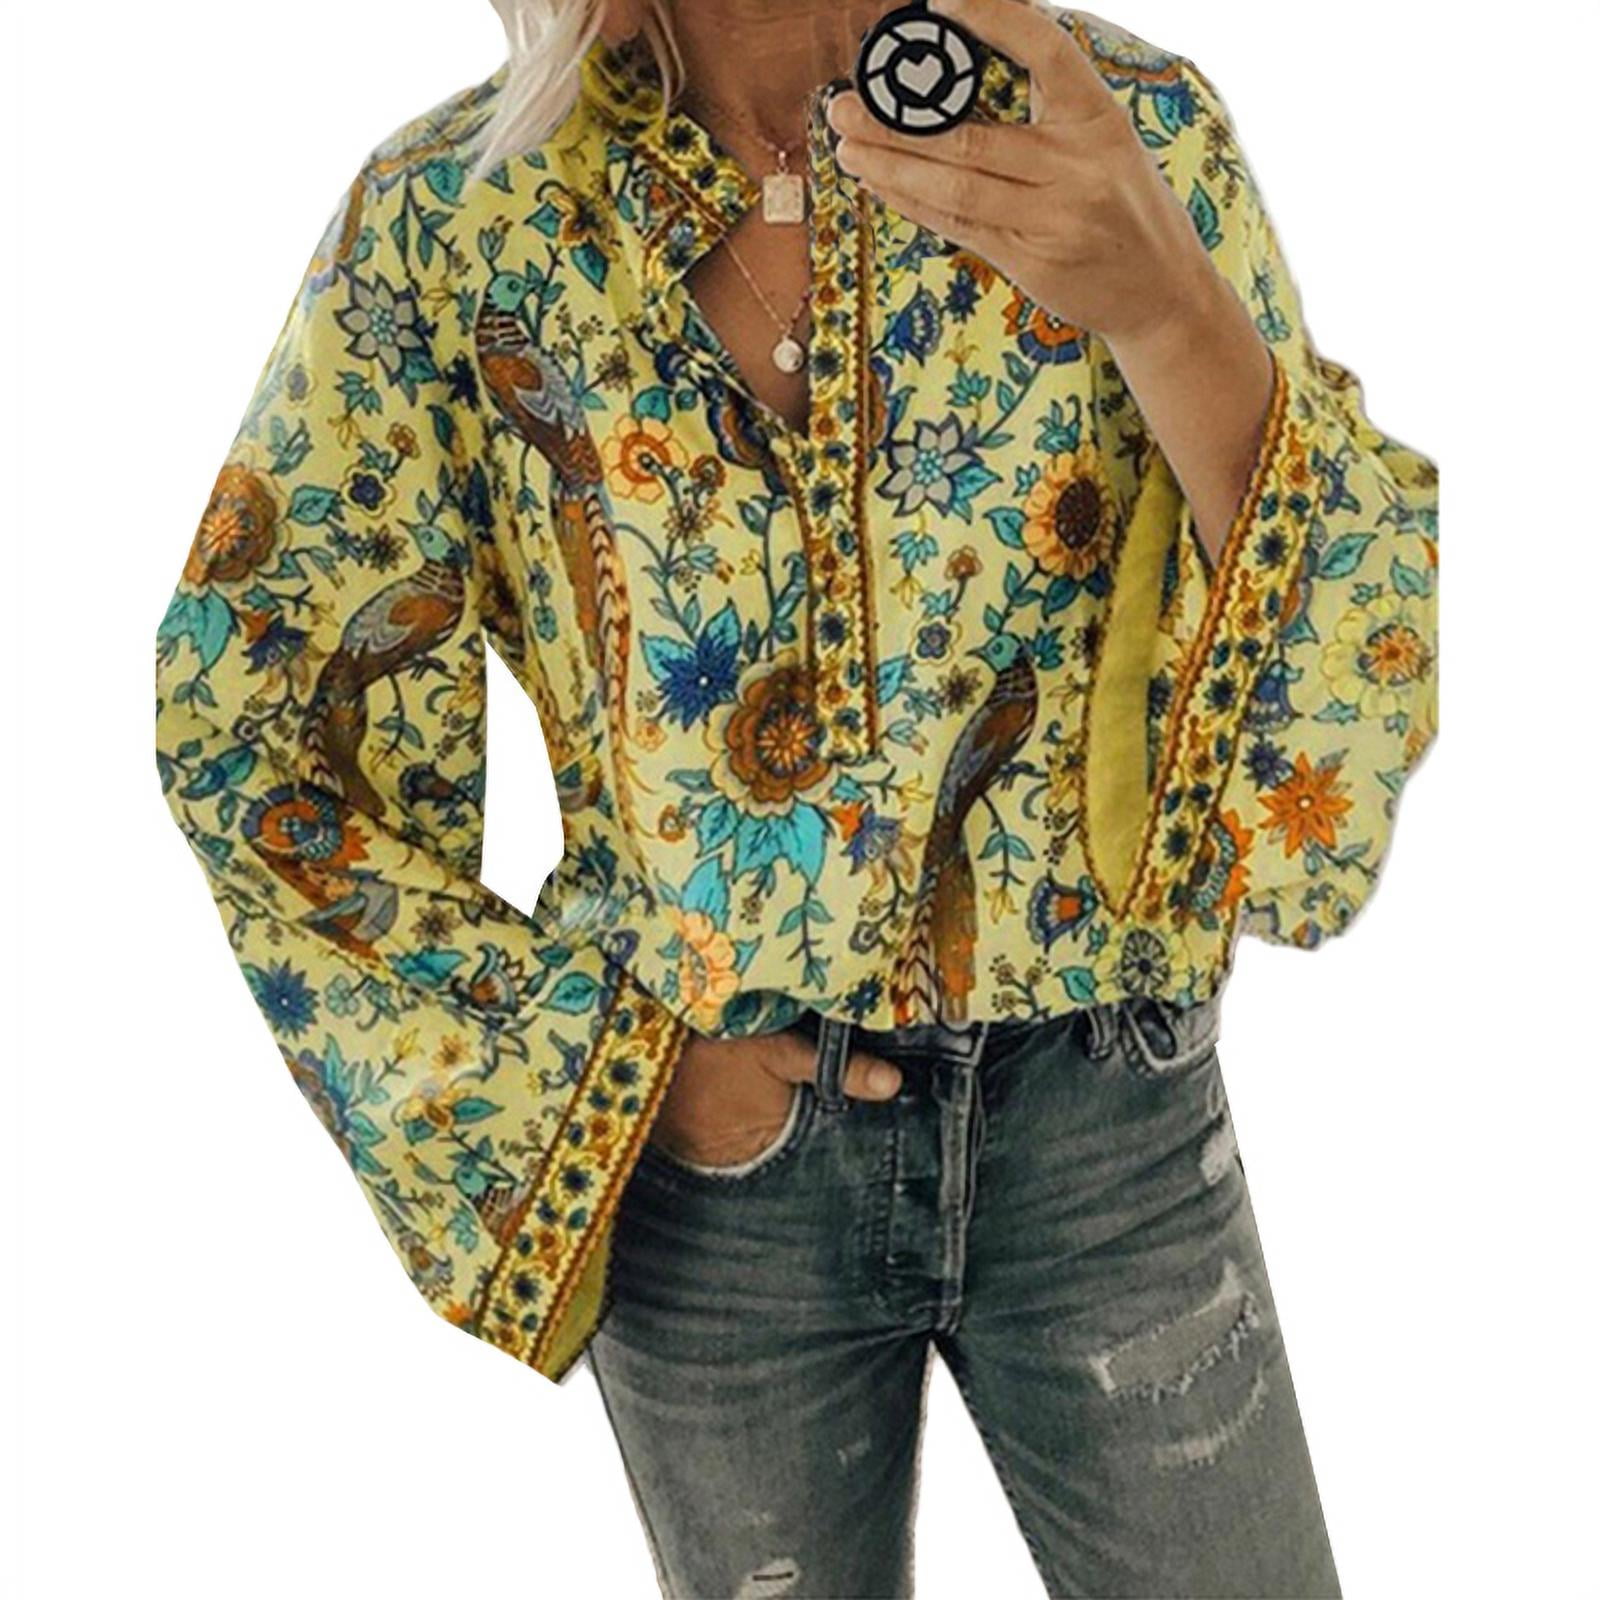 Festival boho hippie retro ethnic print pink beige v-neck long sleeve tunic blouse top 100% pure silk uk 8 10 12 14 small to medium Clothing Womens Clothing Tops & Tees Tunics 